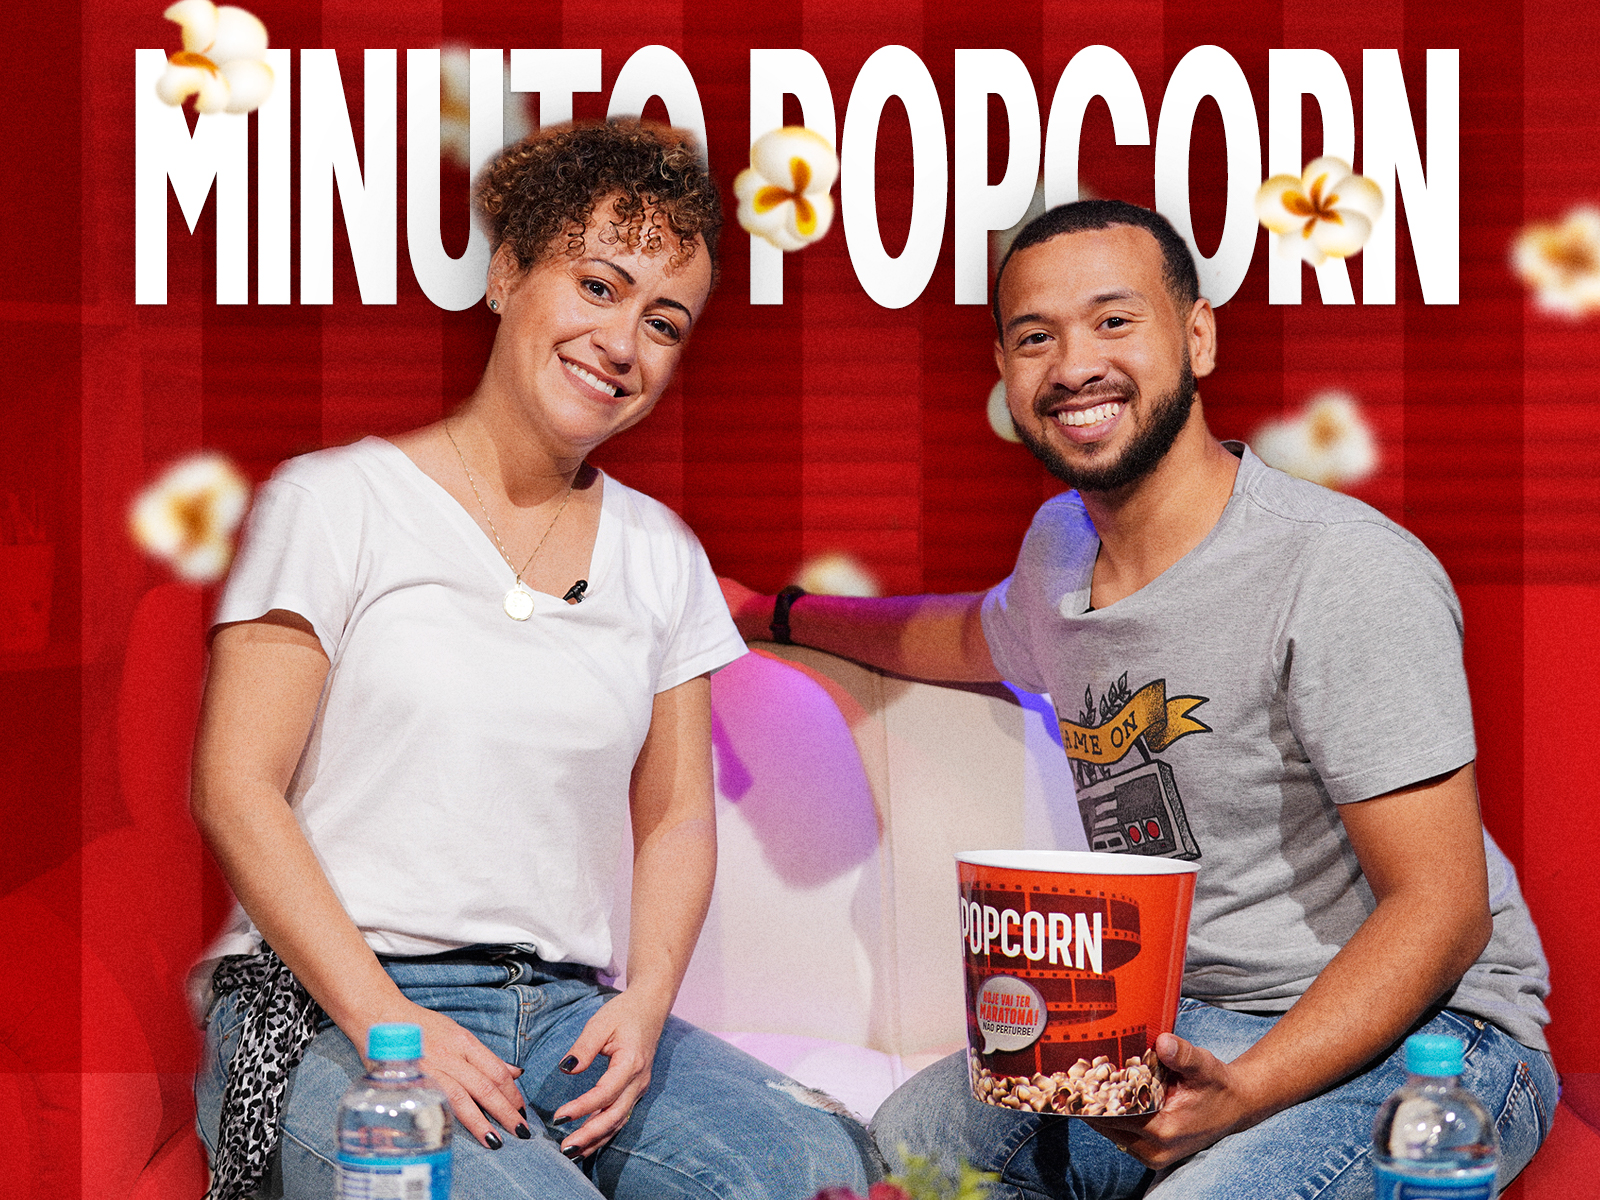 Minuto Popcorn com Guilherme Christóvão #51